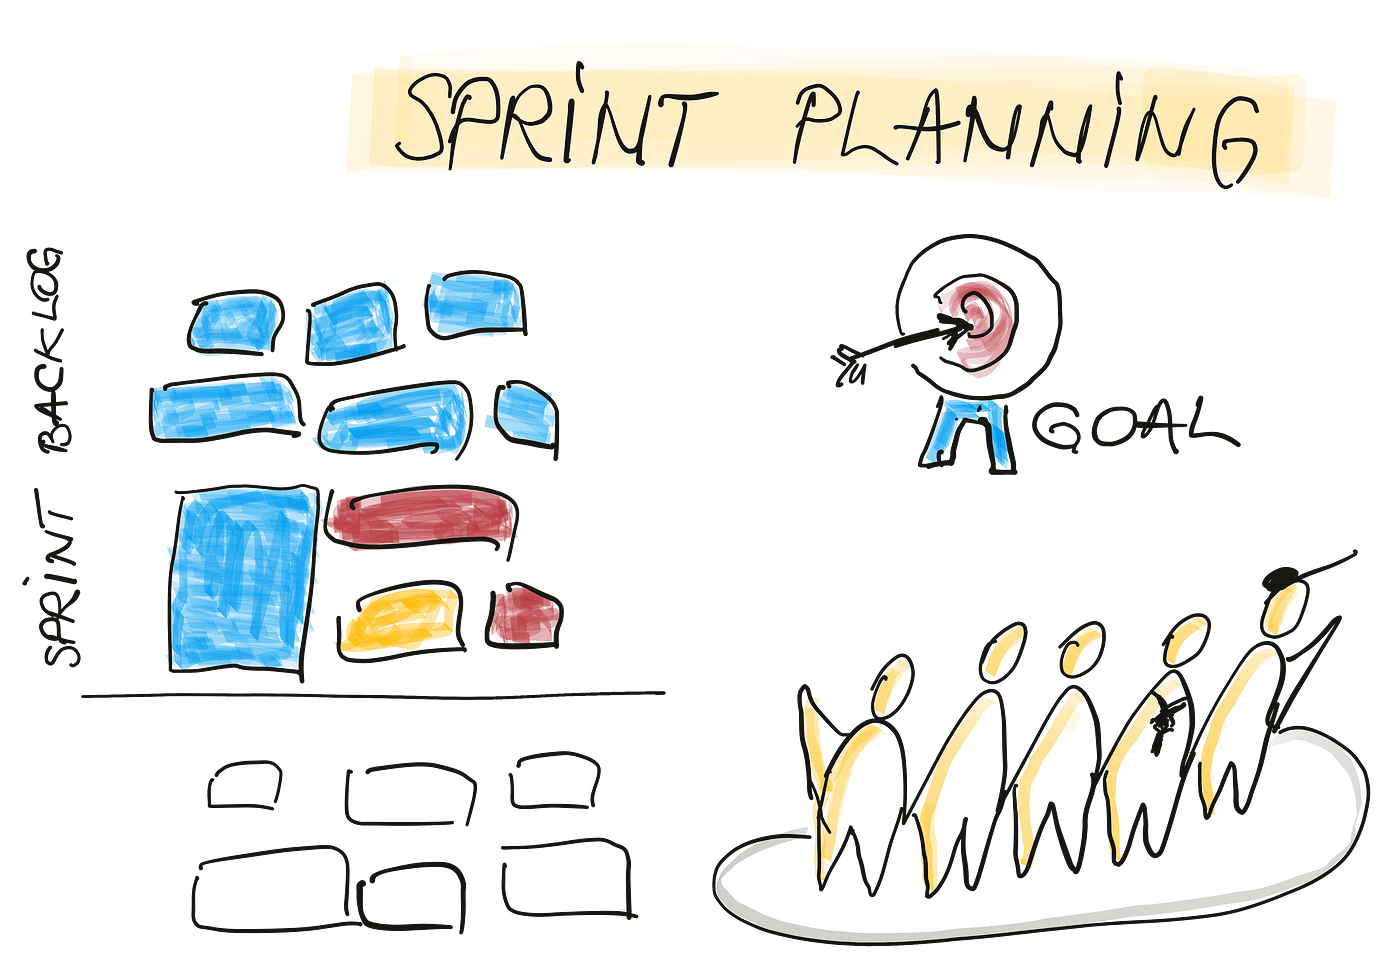 The elements of sprint planning: sprint backlog, sprint goal, scrum team, product backlog.